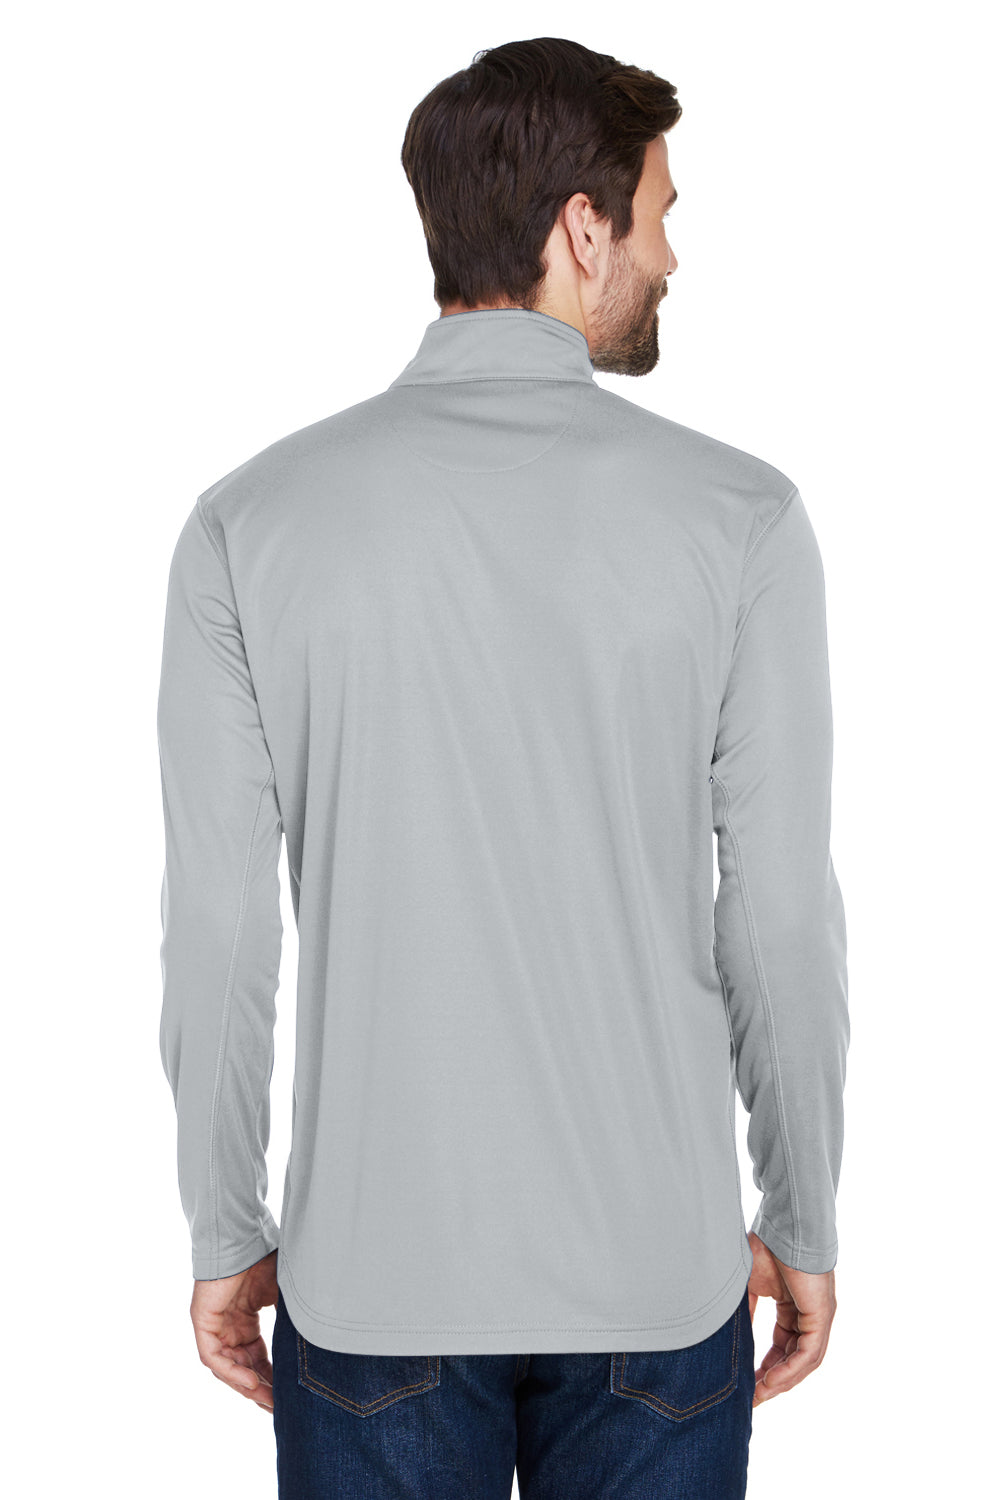 UltraClub 8230 Mens Cool & Dry Moisture Wicking 1/4 Zip Sweatshirt Grey Back